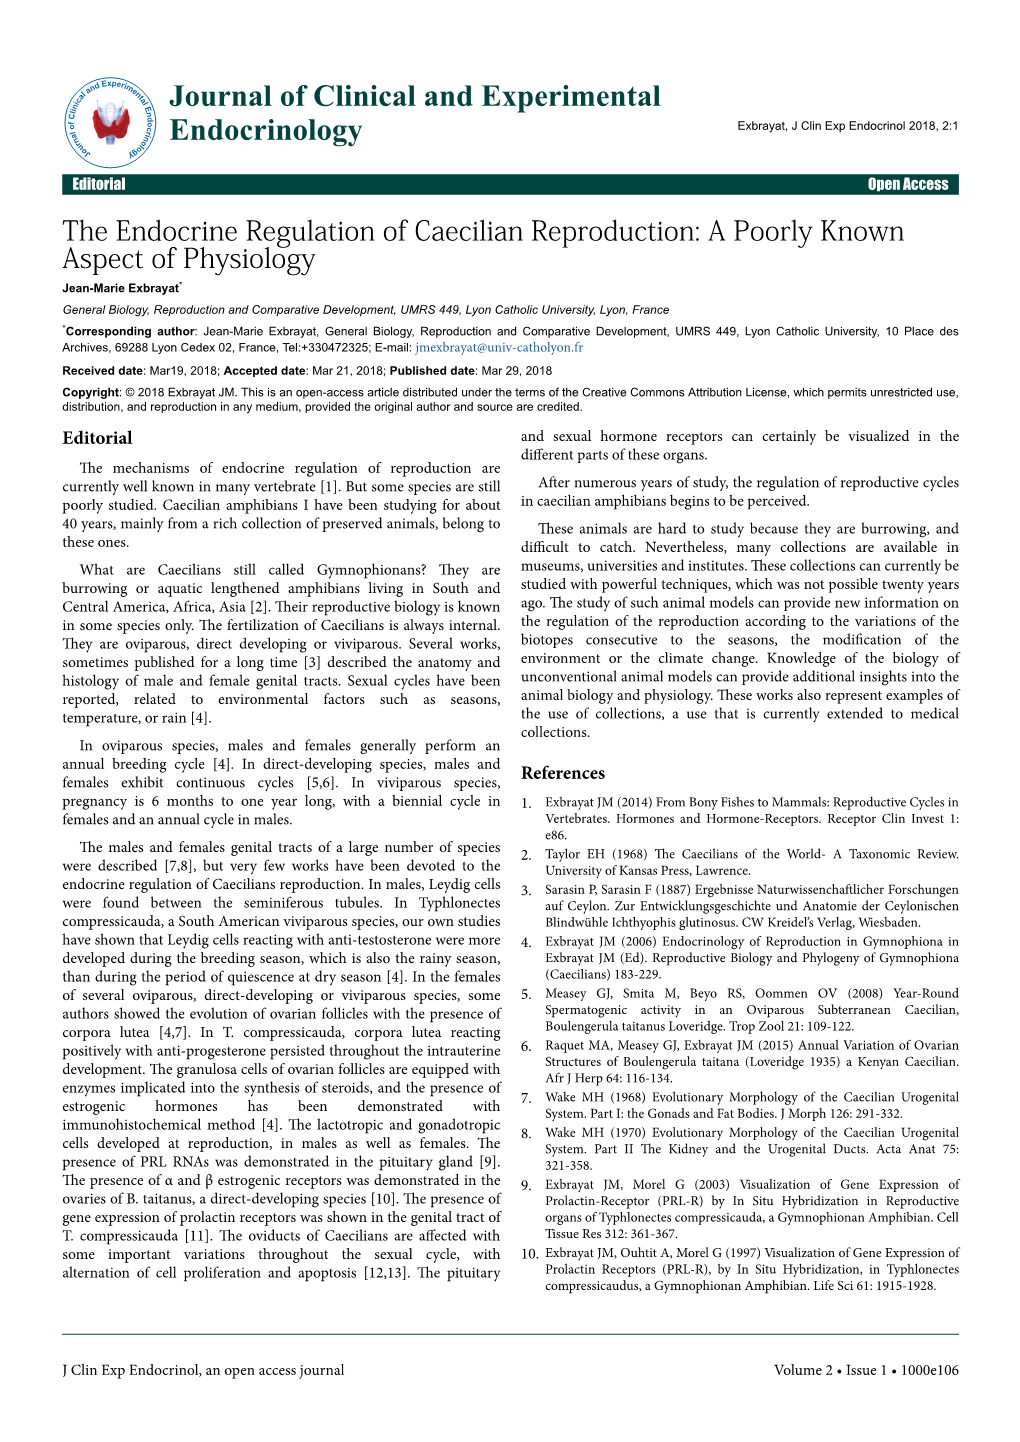 The Endocrine Regulation of Caecilian